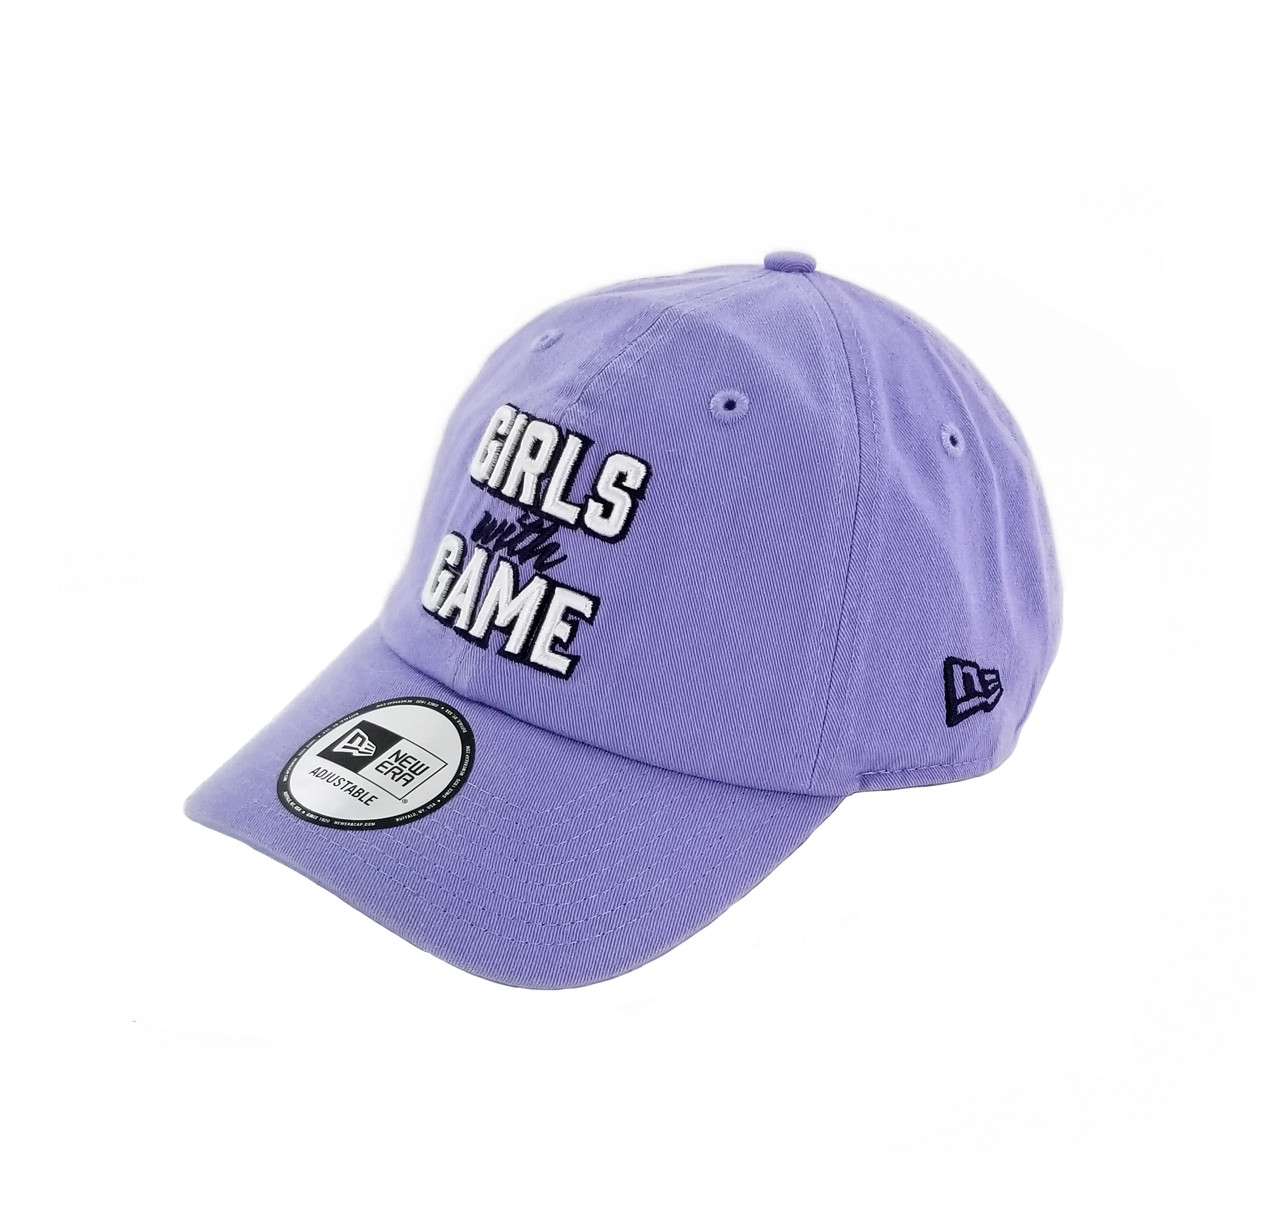 Era Cap Girls With Game Adjustable Cap - Little League Official Store